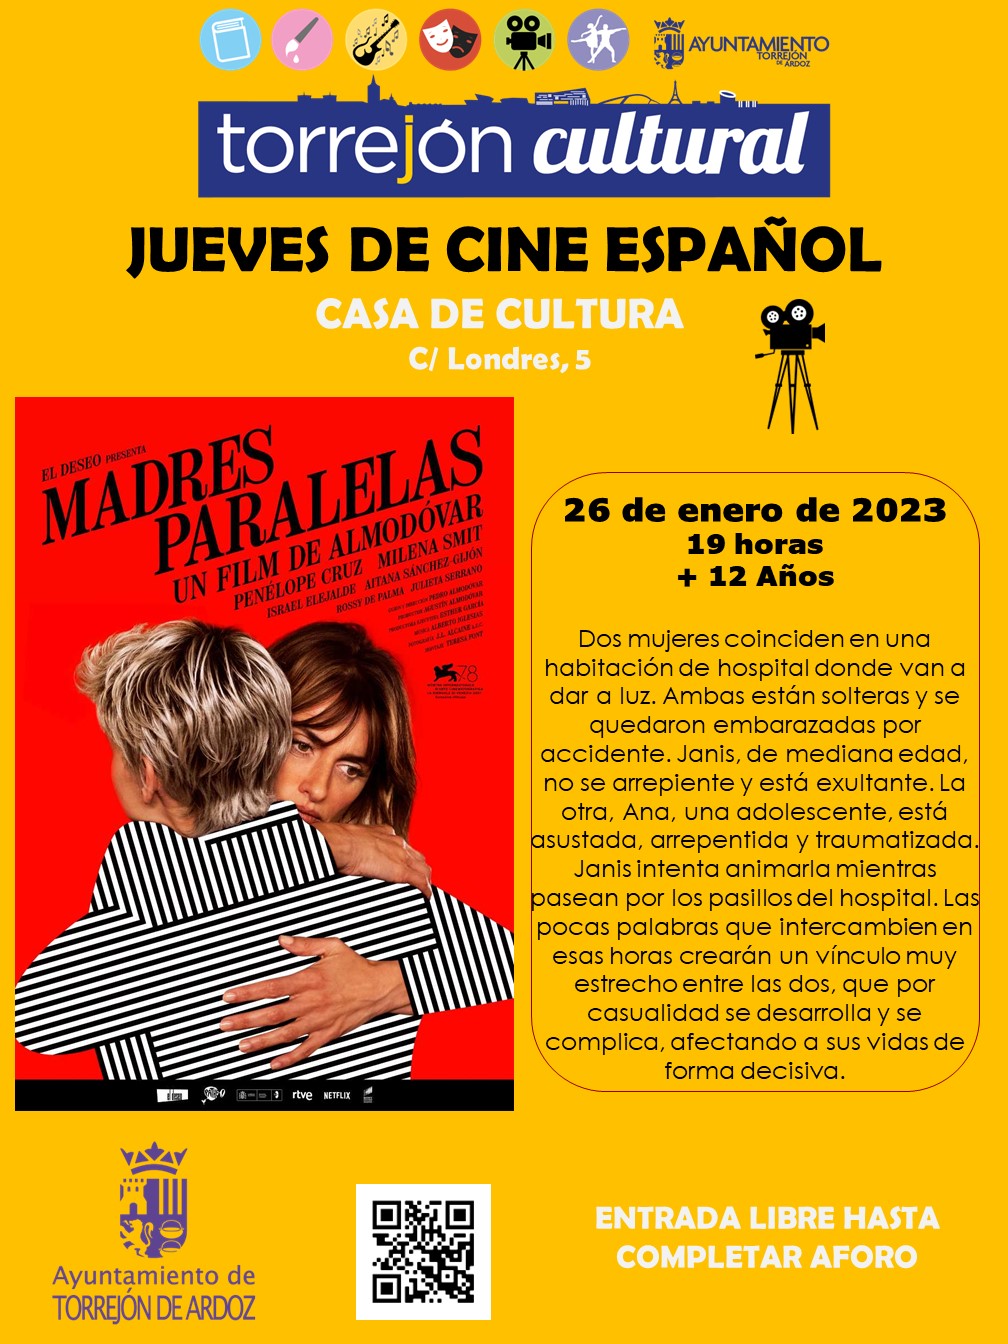 Jueves de Cine Español - Madres paralelas